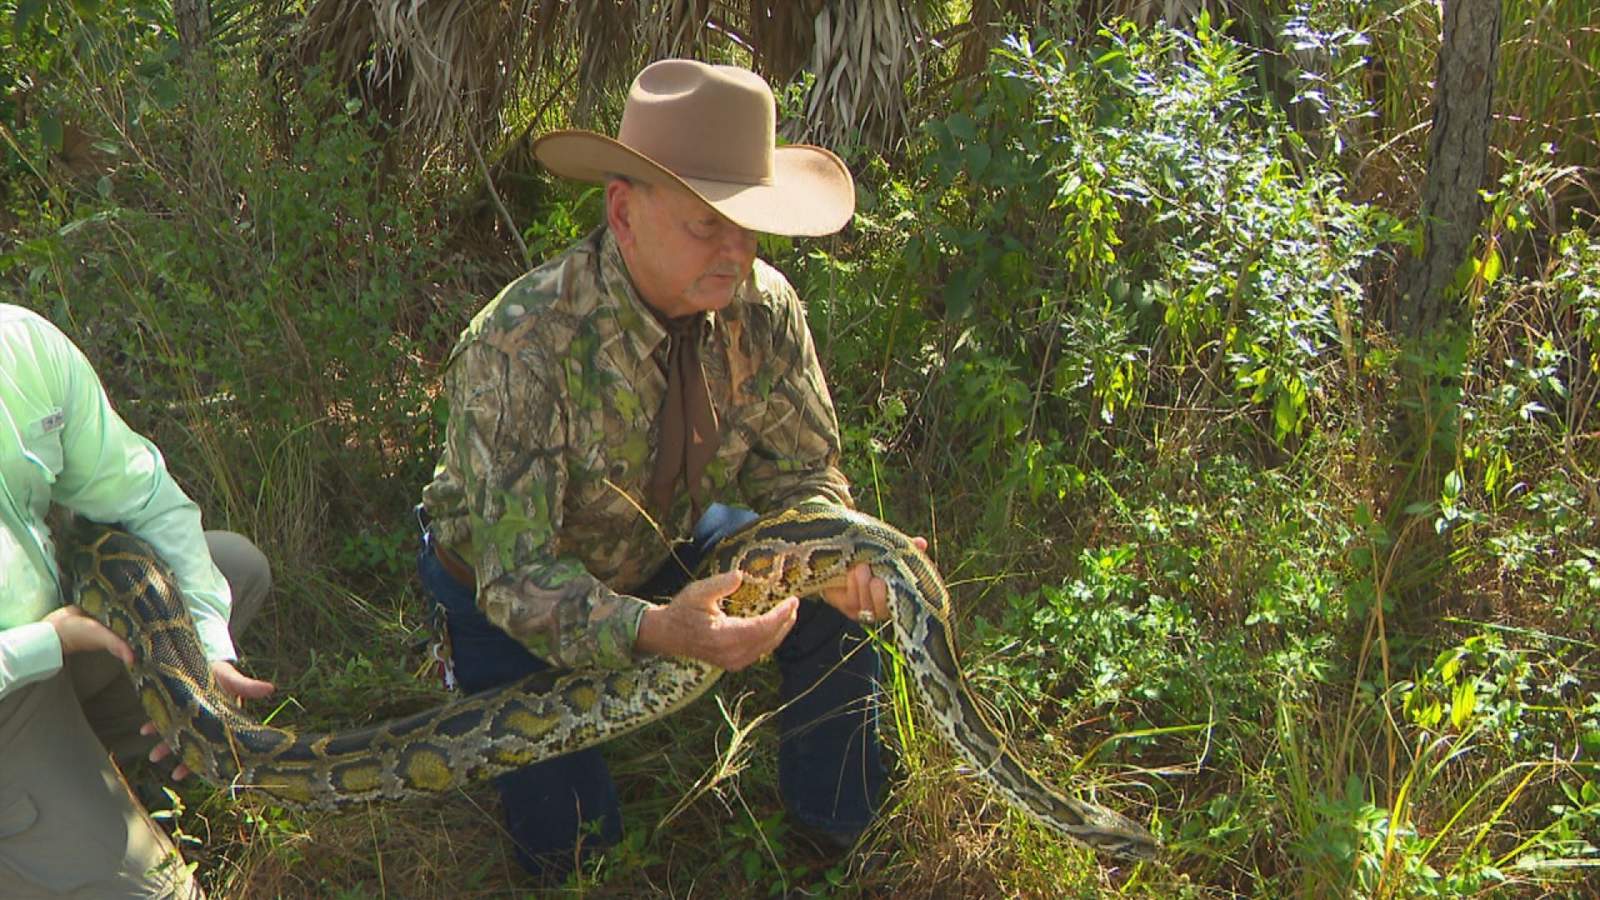 Florida 2020 Python Bowl to offer prizes for eradicating invasive snakes